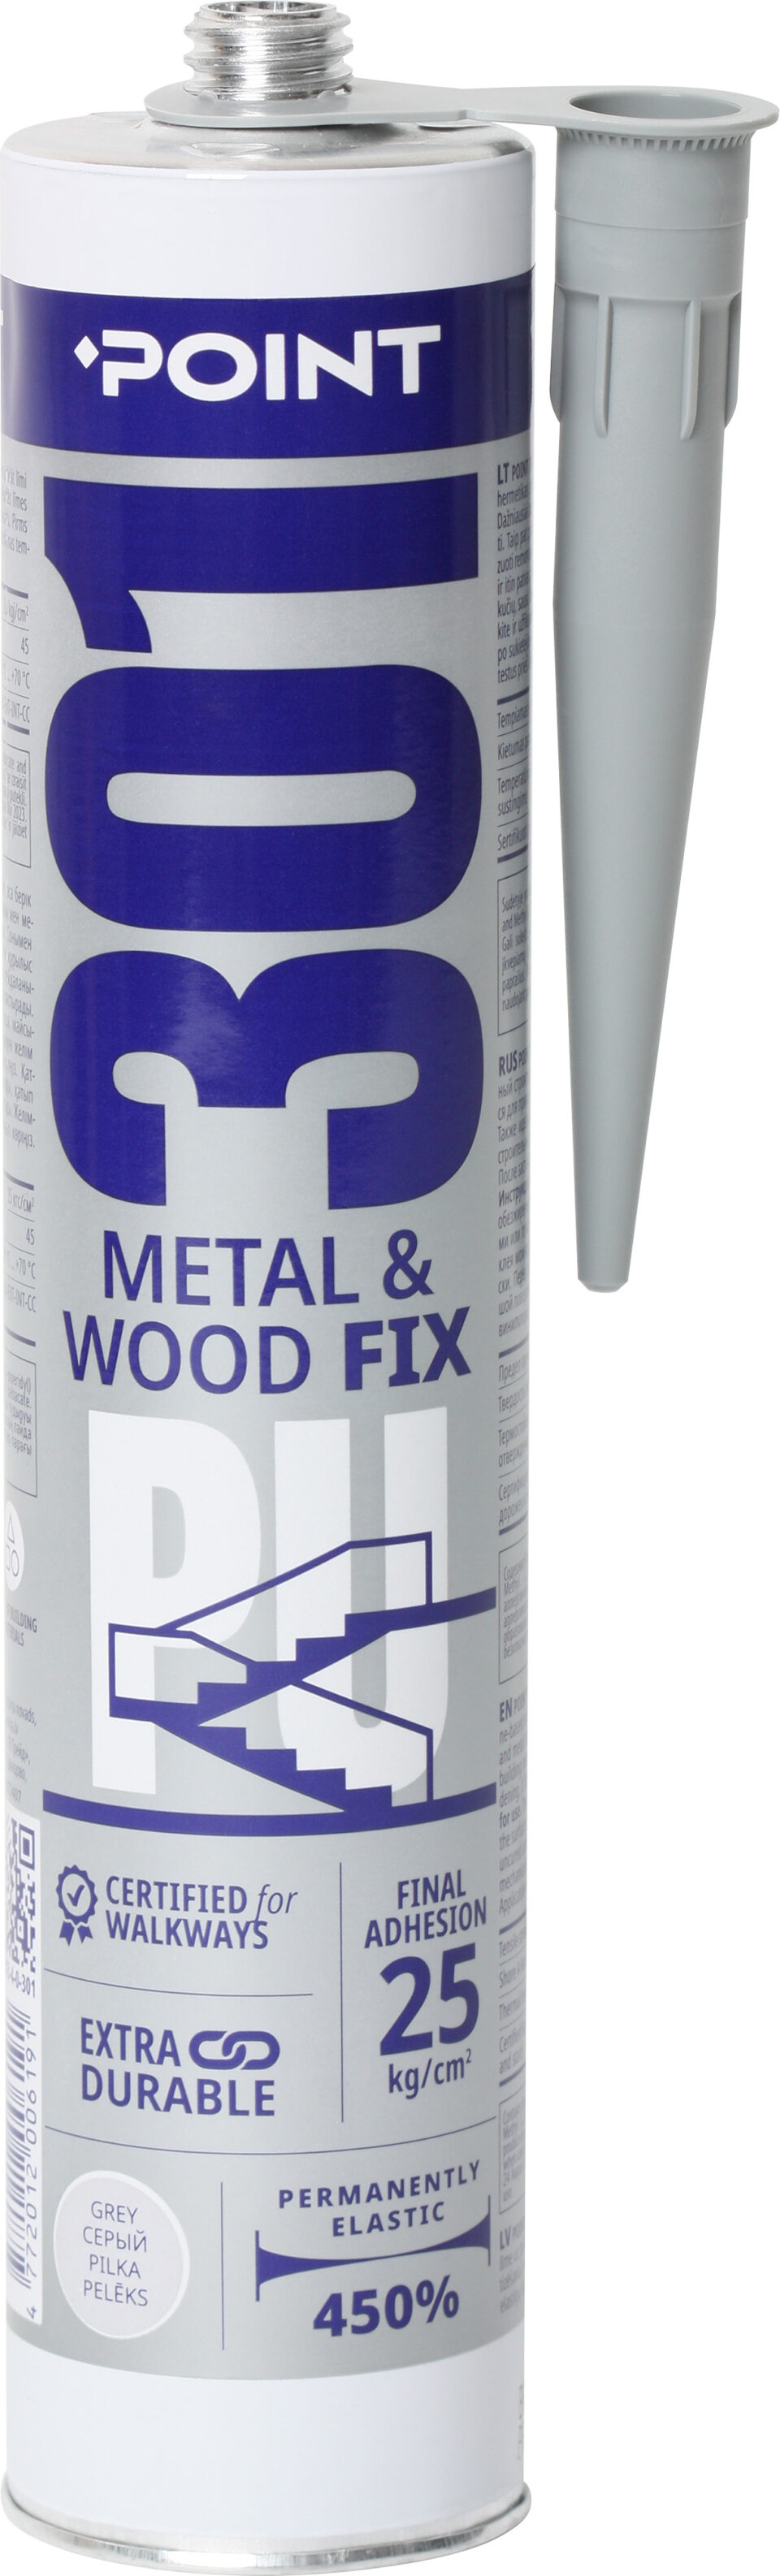 PU 301 Metal & Wood Fix polyurethane construction adhesive and sealant